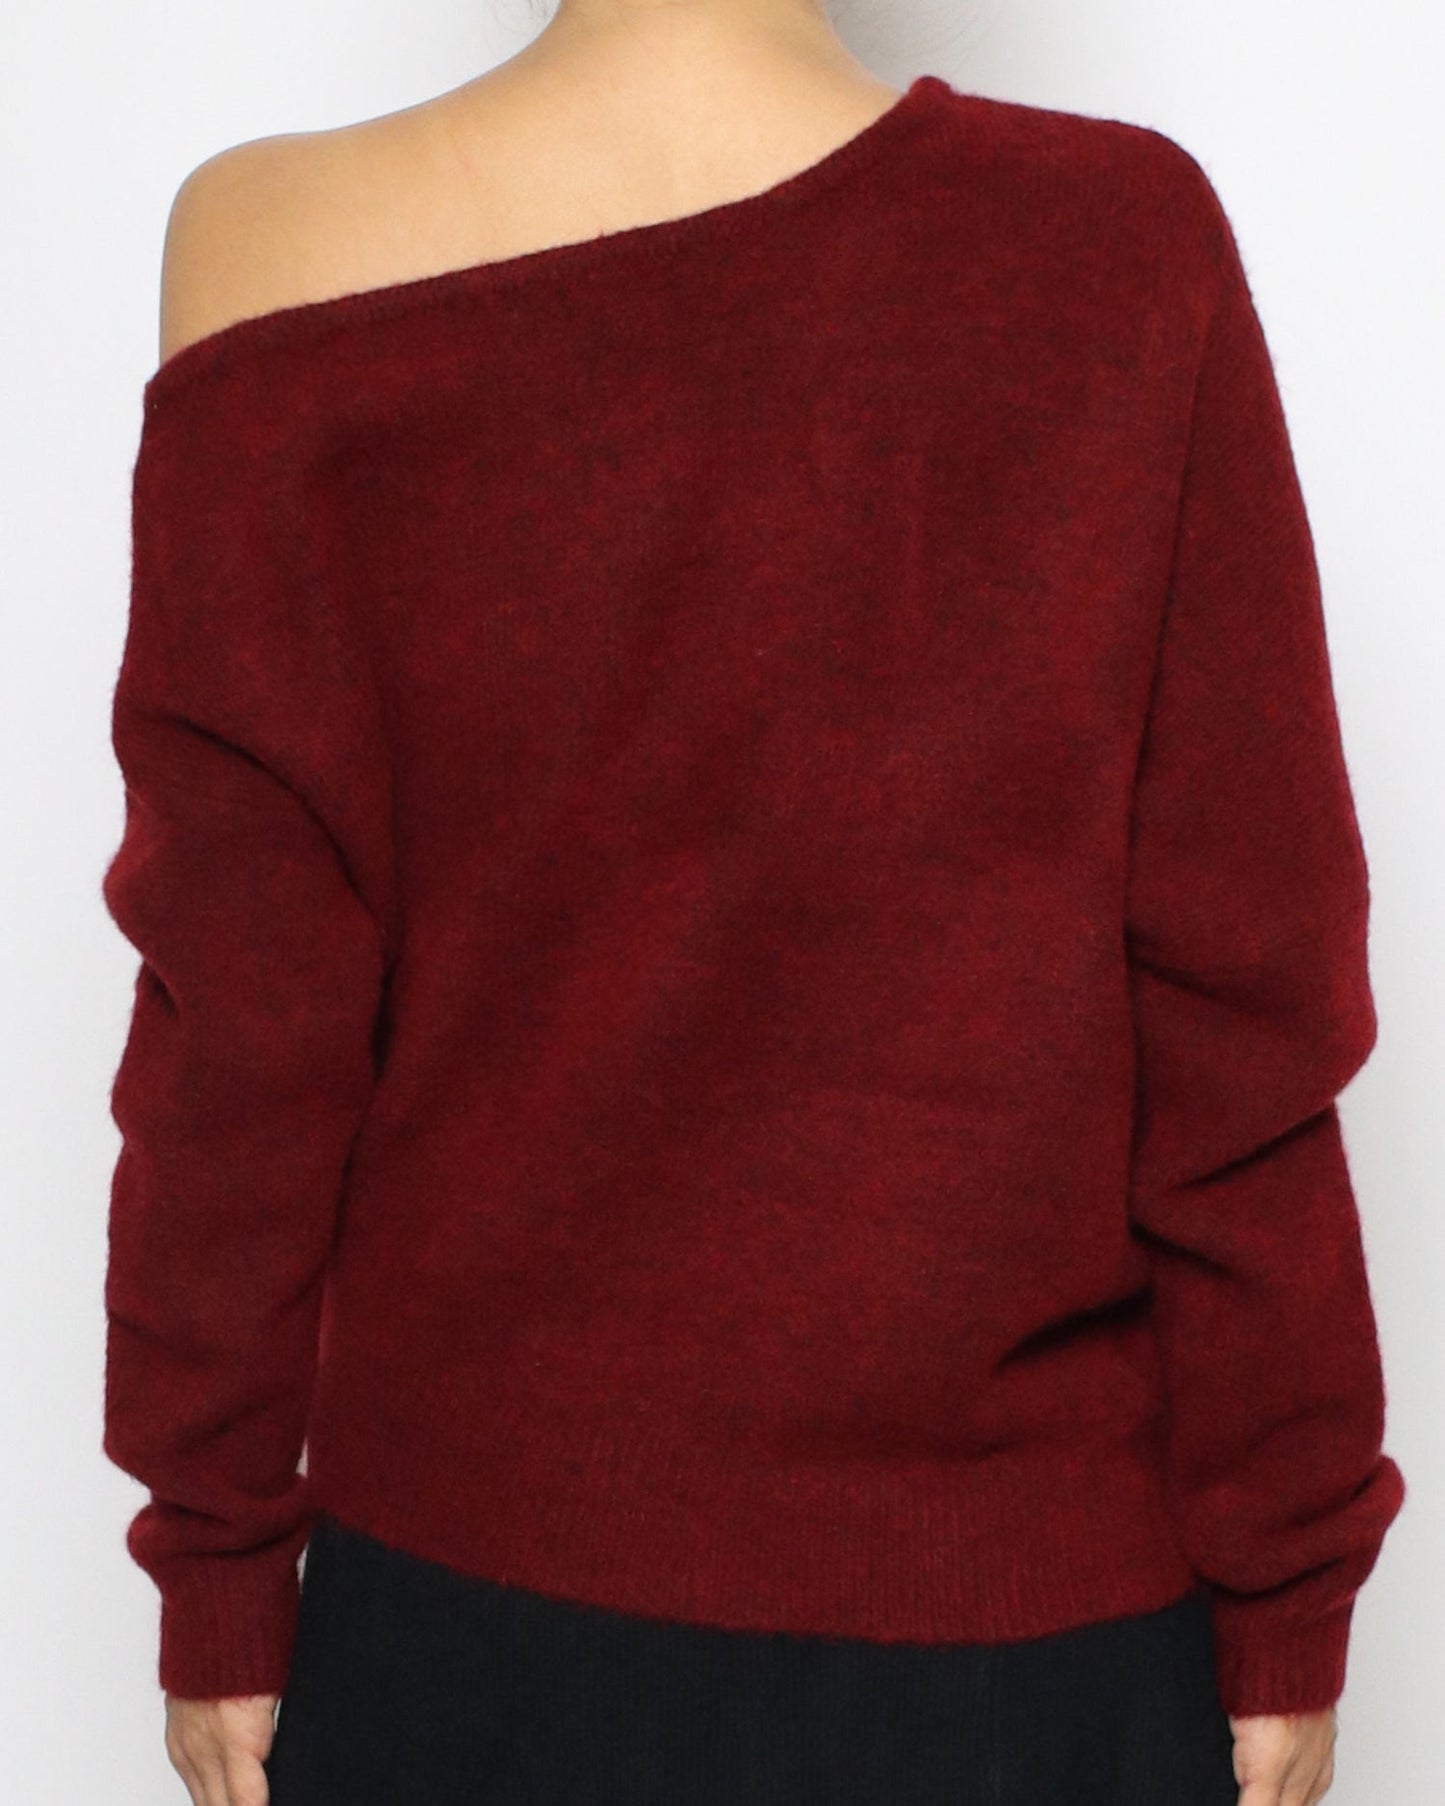 burgundy red off shoulder knitted top